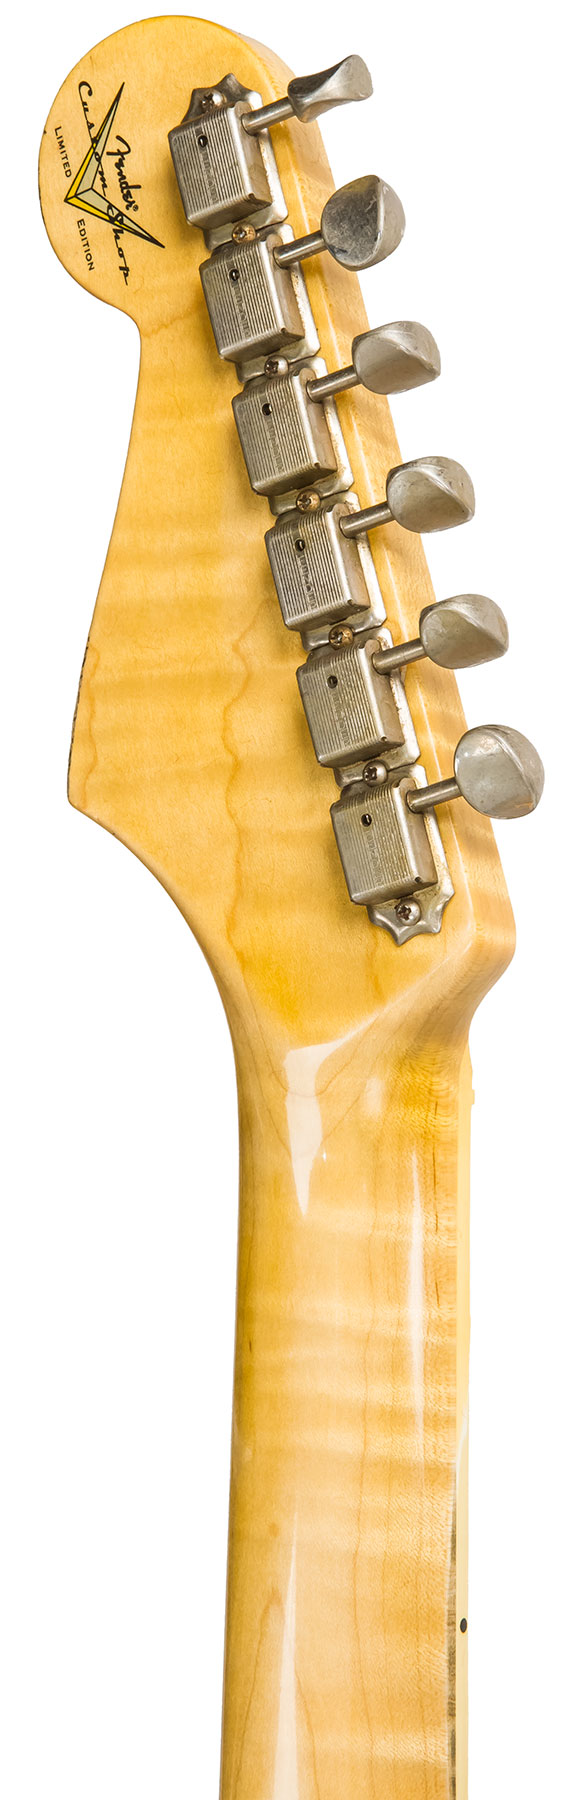 Fender Custom Shop Strat 1965 Ltd Usa Rw #cz548544 - Relic Daphne Blue Sparkle - Guitarra eléctrica con forma de str. - Variation 6